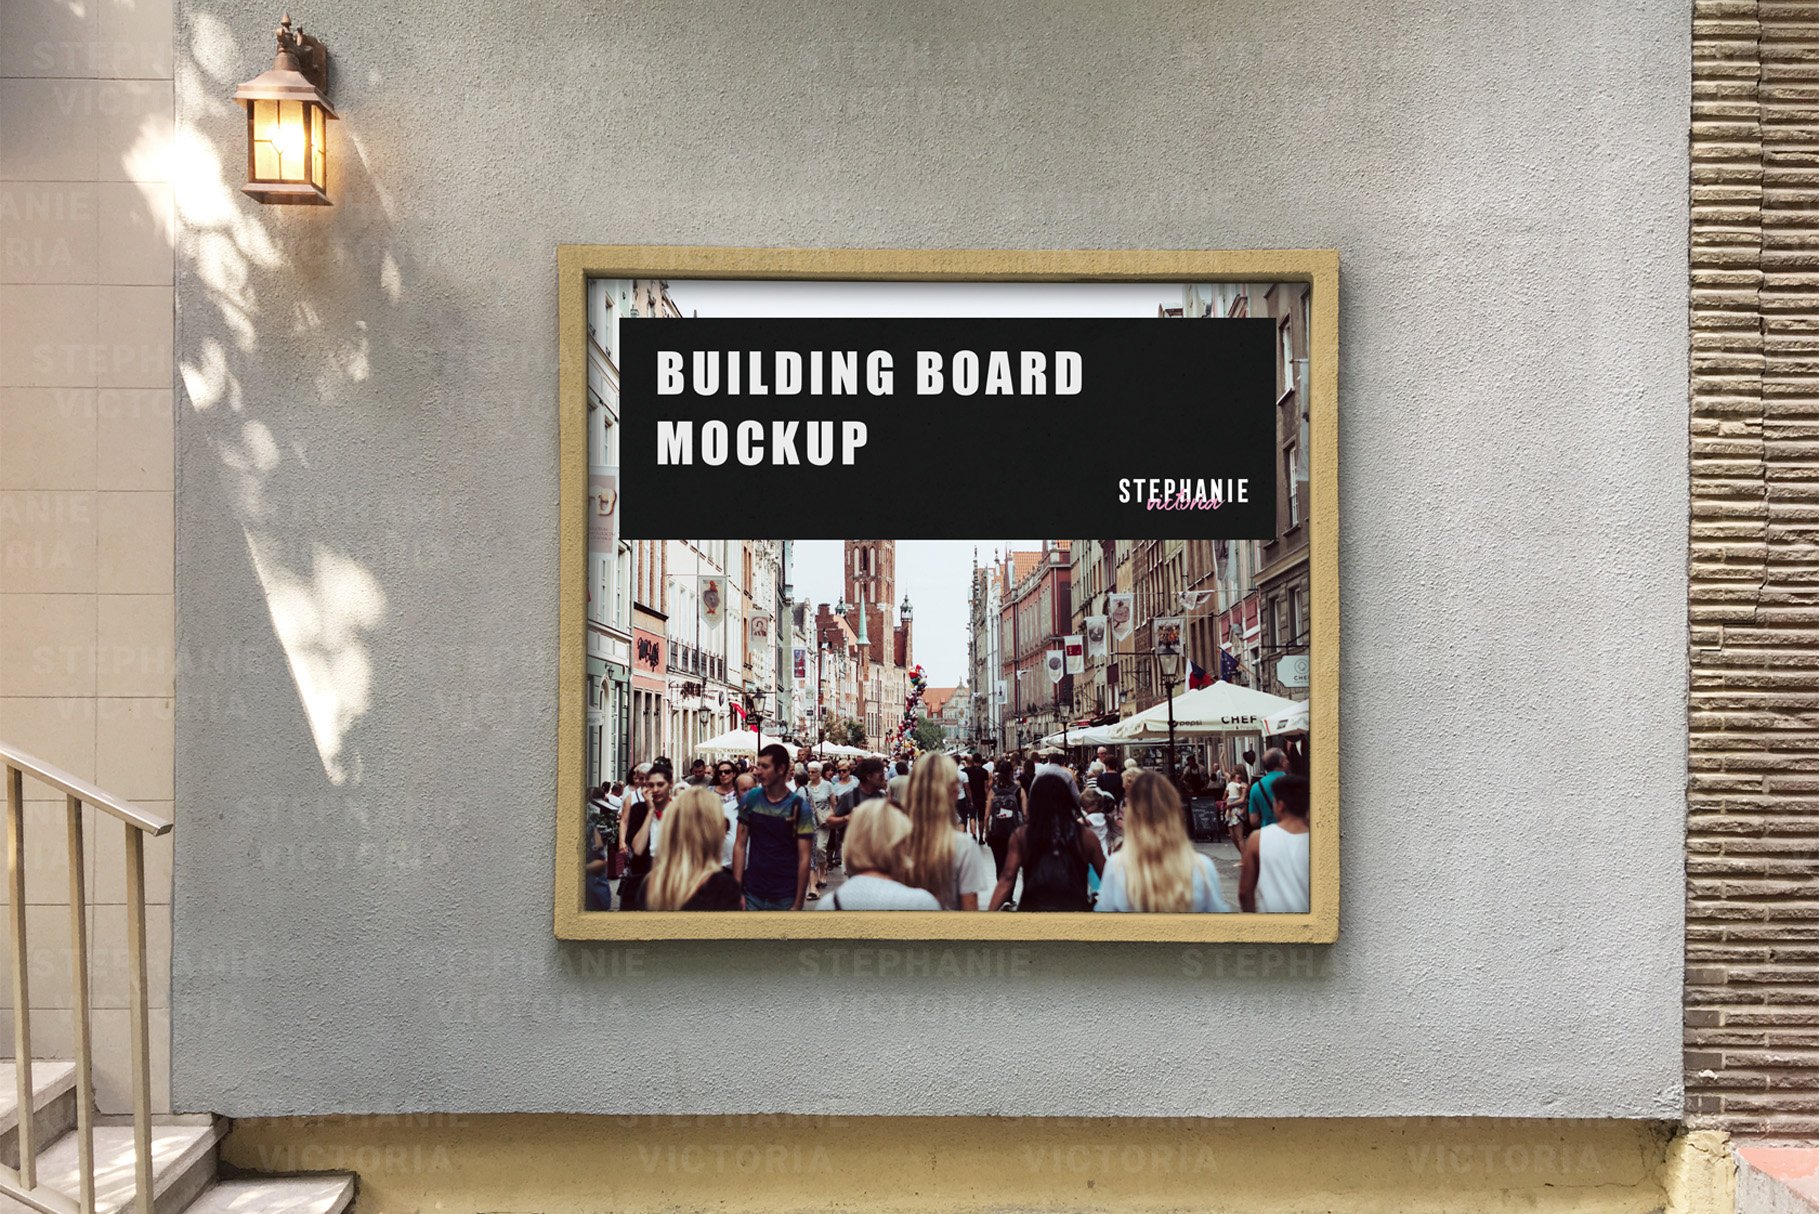 Building Board Mockup cover image.